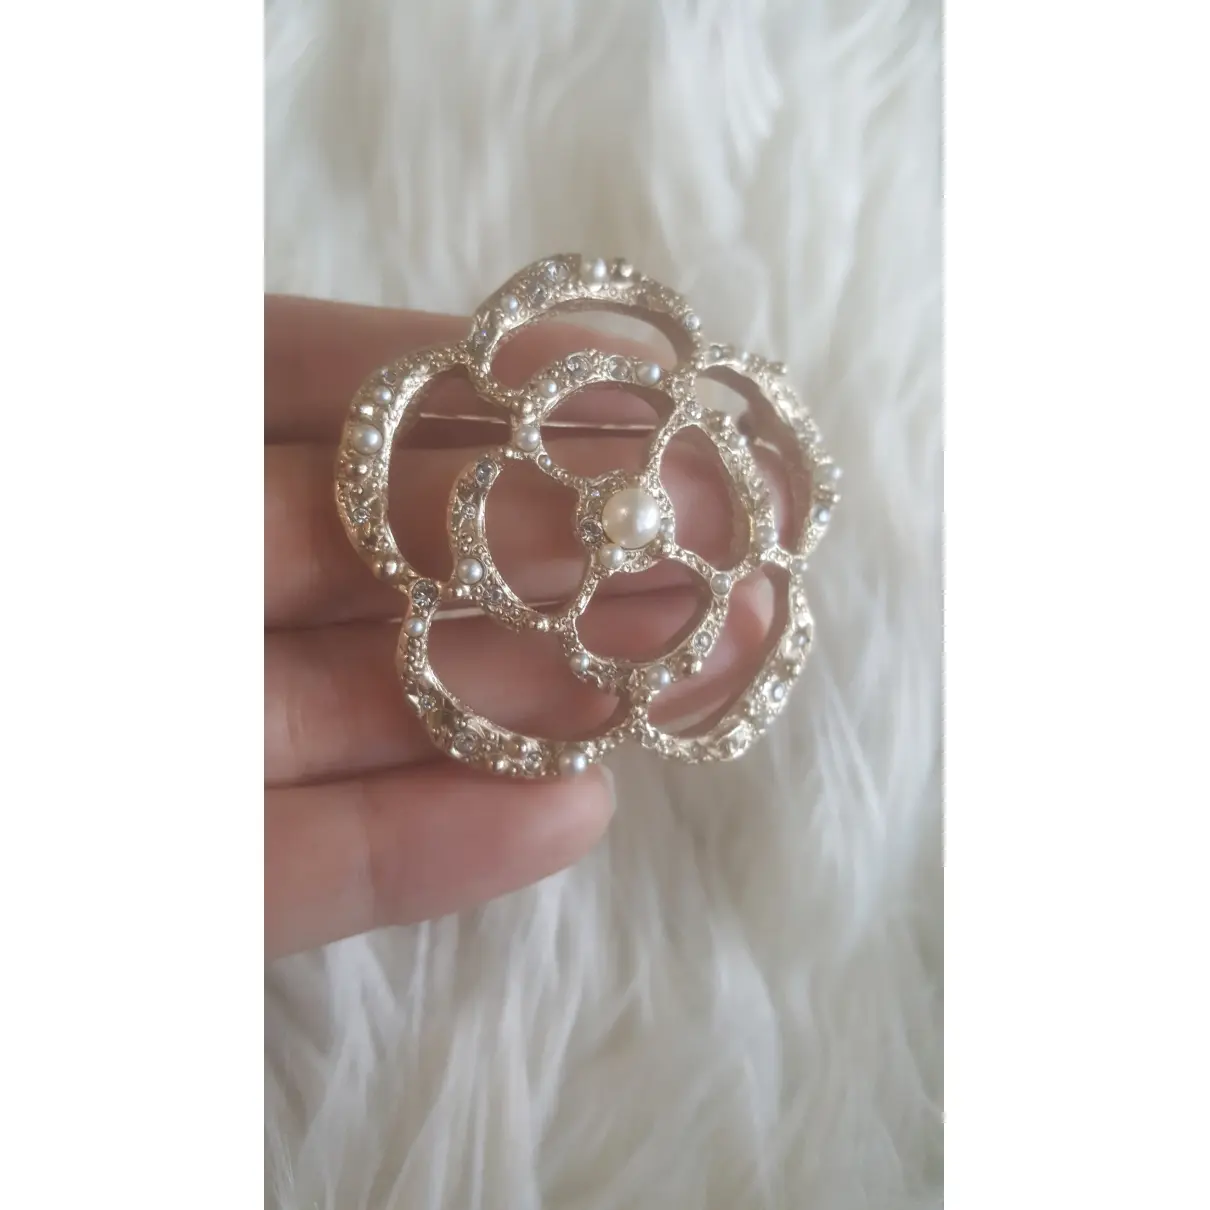 Buy Chanel Camélia crystal pin & brooche online